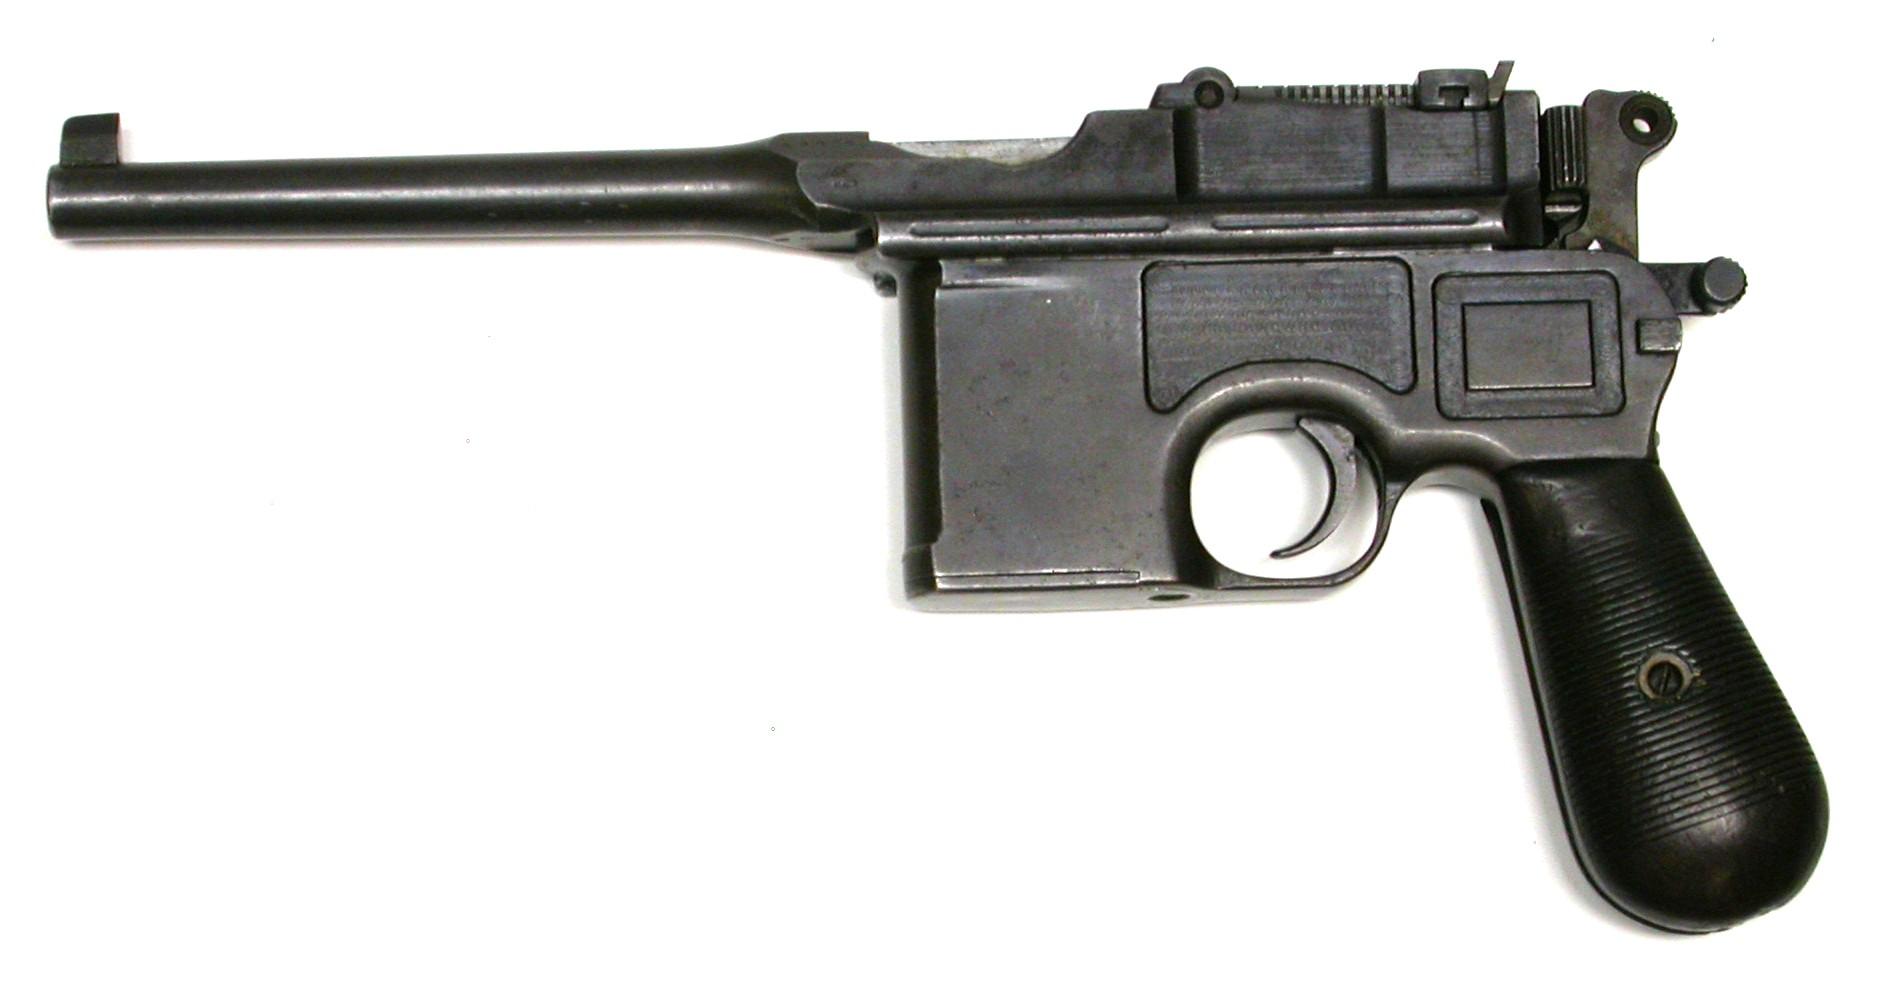 Imperial Germa WWI C96 7.63mm Mauser "Broomhandle" Semi-Autom Pistol & Stock-FFL#400250 (CYM)